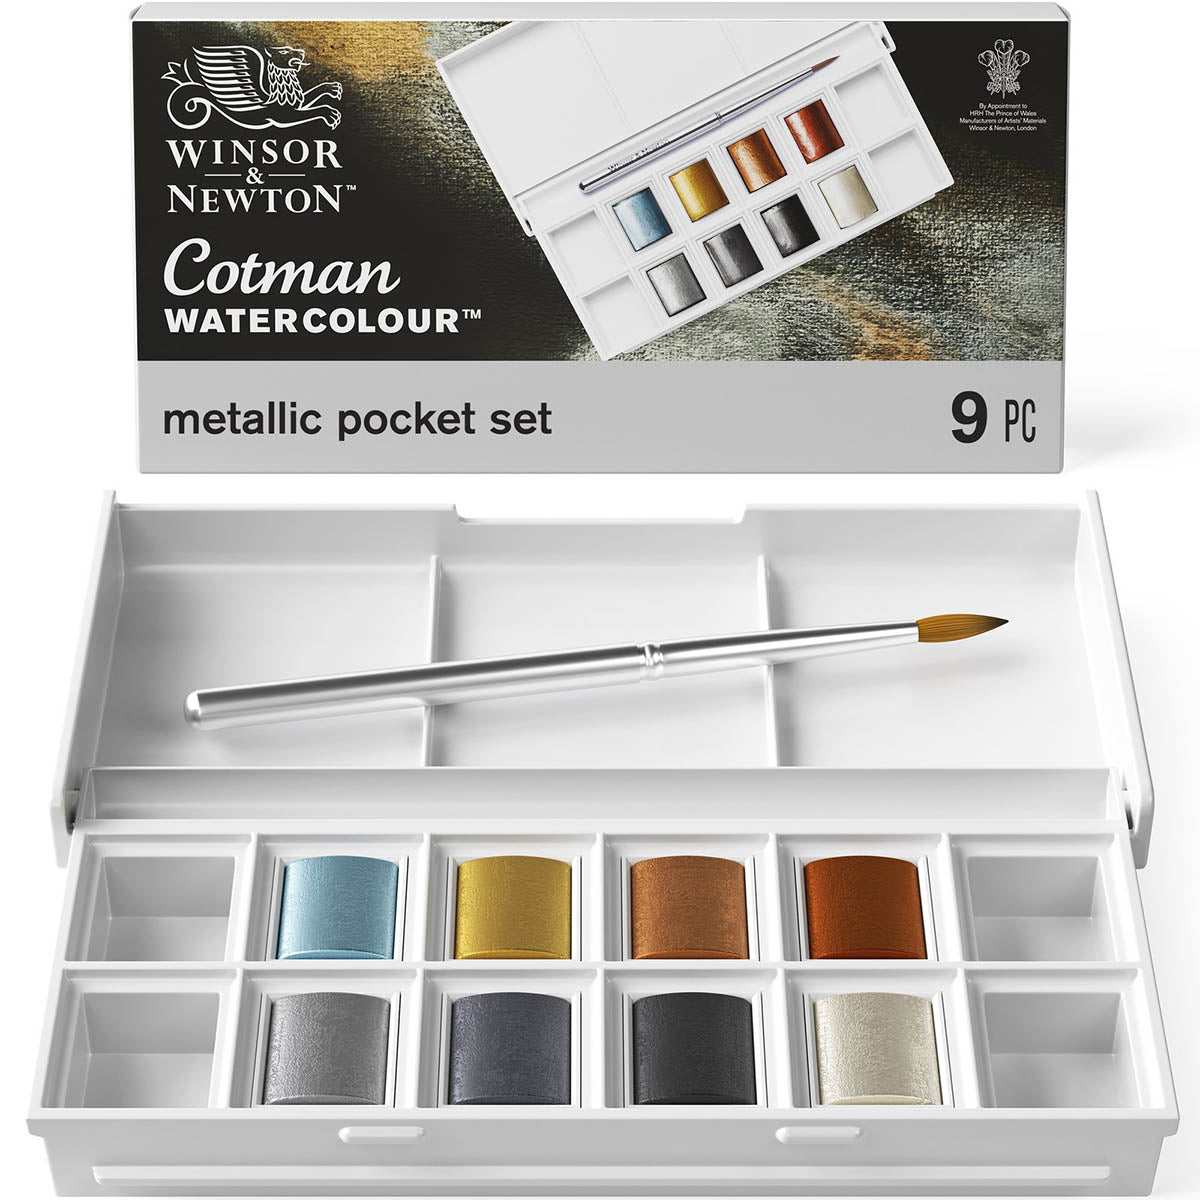 Winsor & Newton - Cotman Watercolour - Pocket Set - Metallic